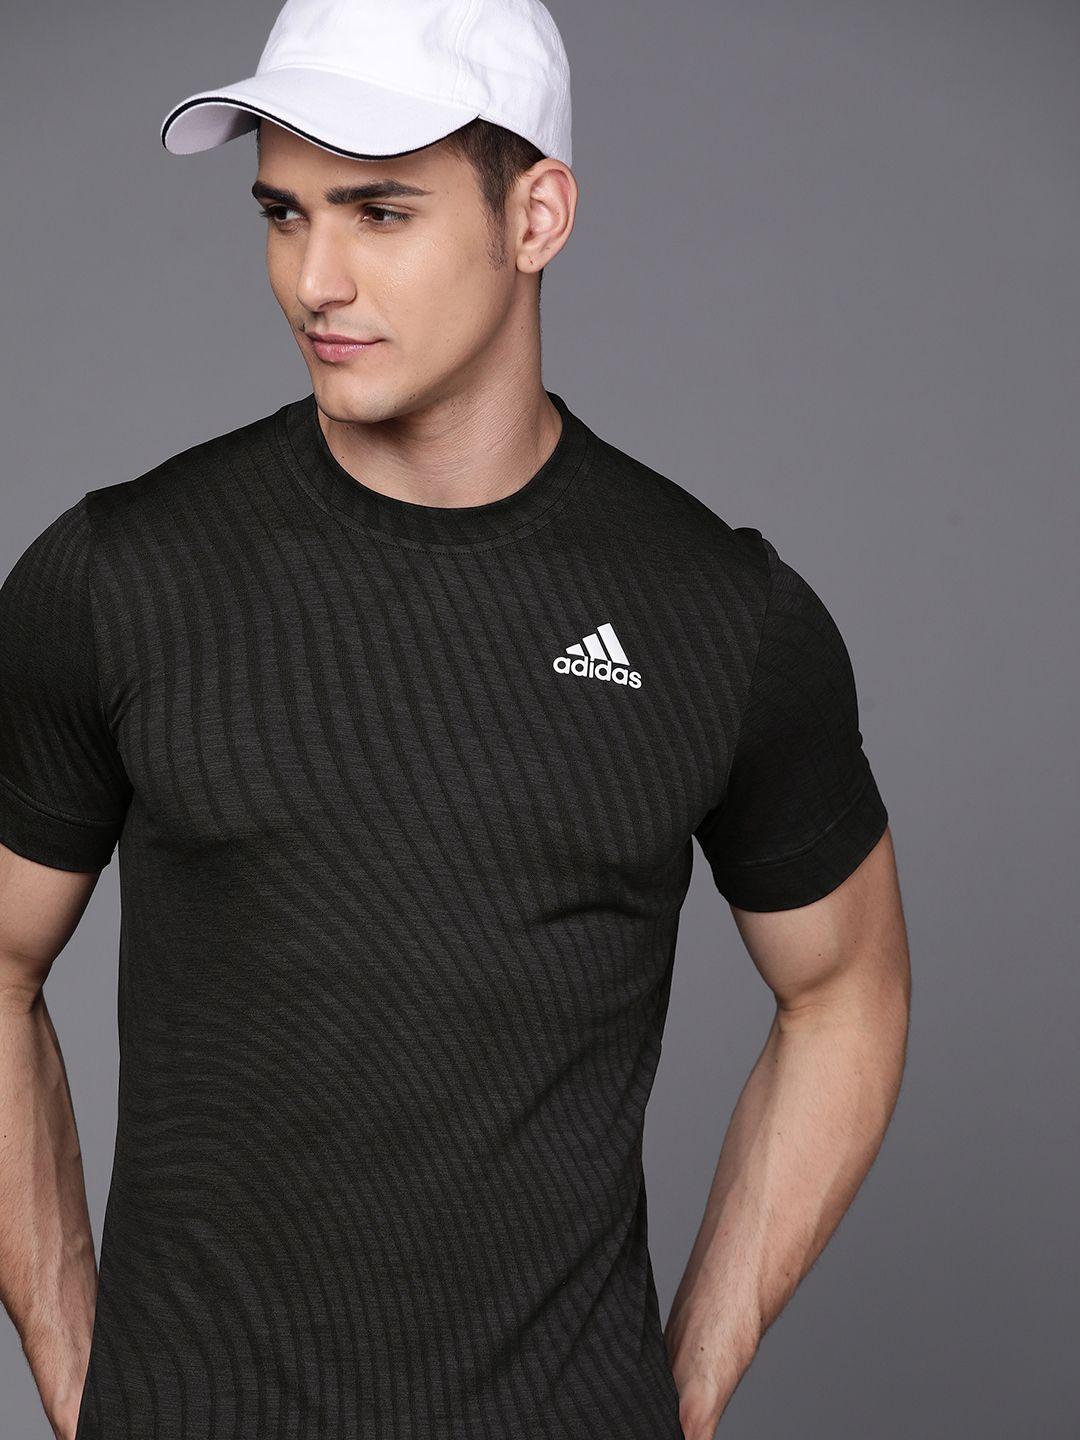 adidas men black t freelift brand logo printed slim fit tennis sustainable t-shirt